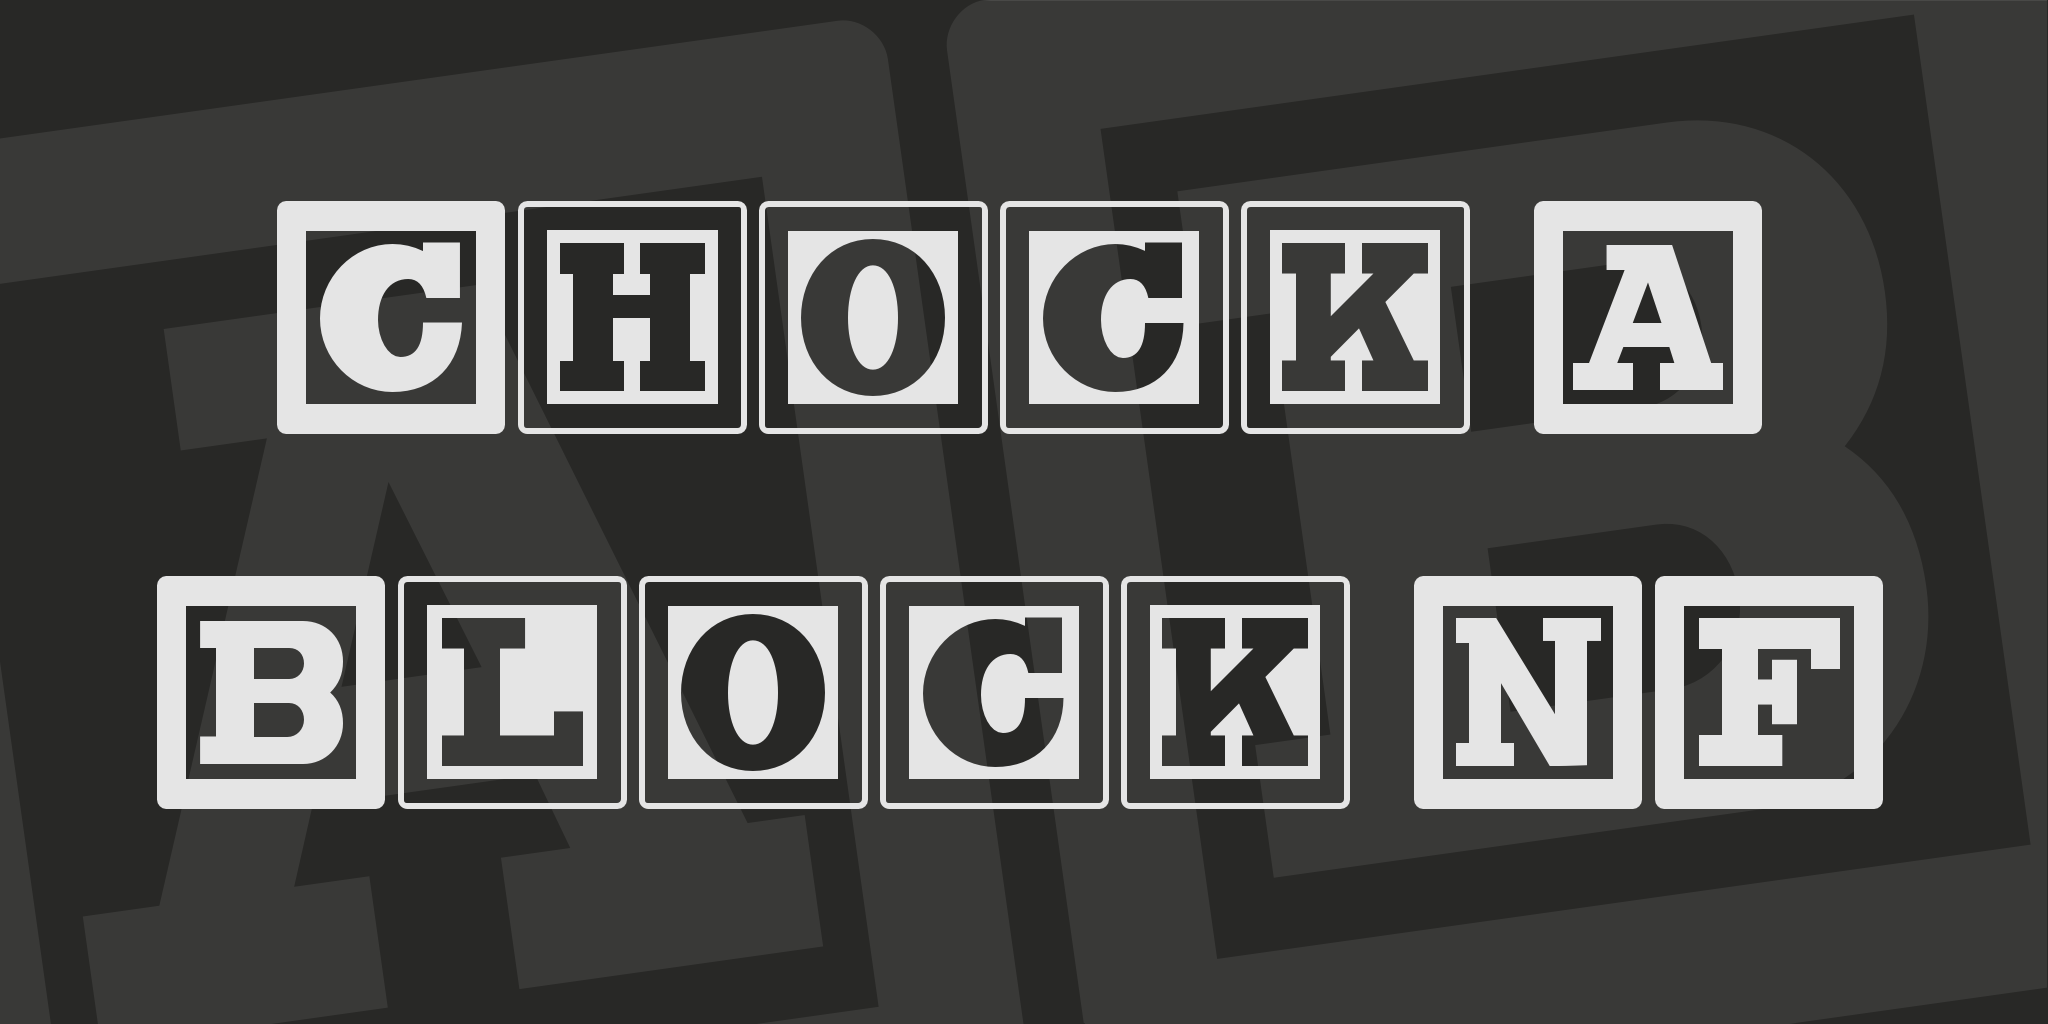 Chock A Block Nf